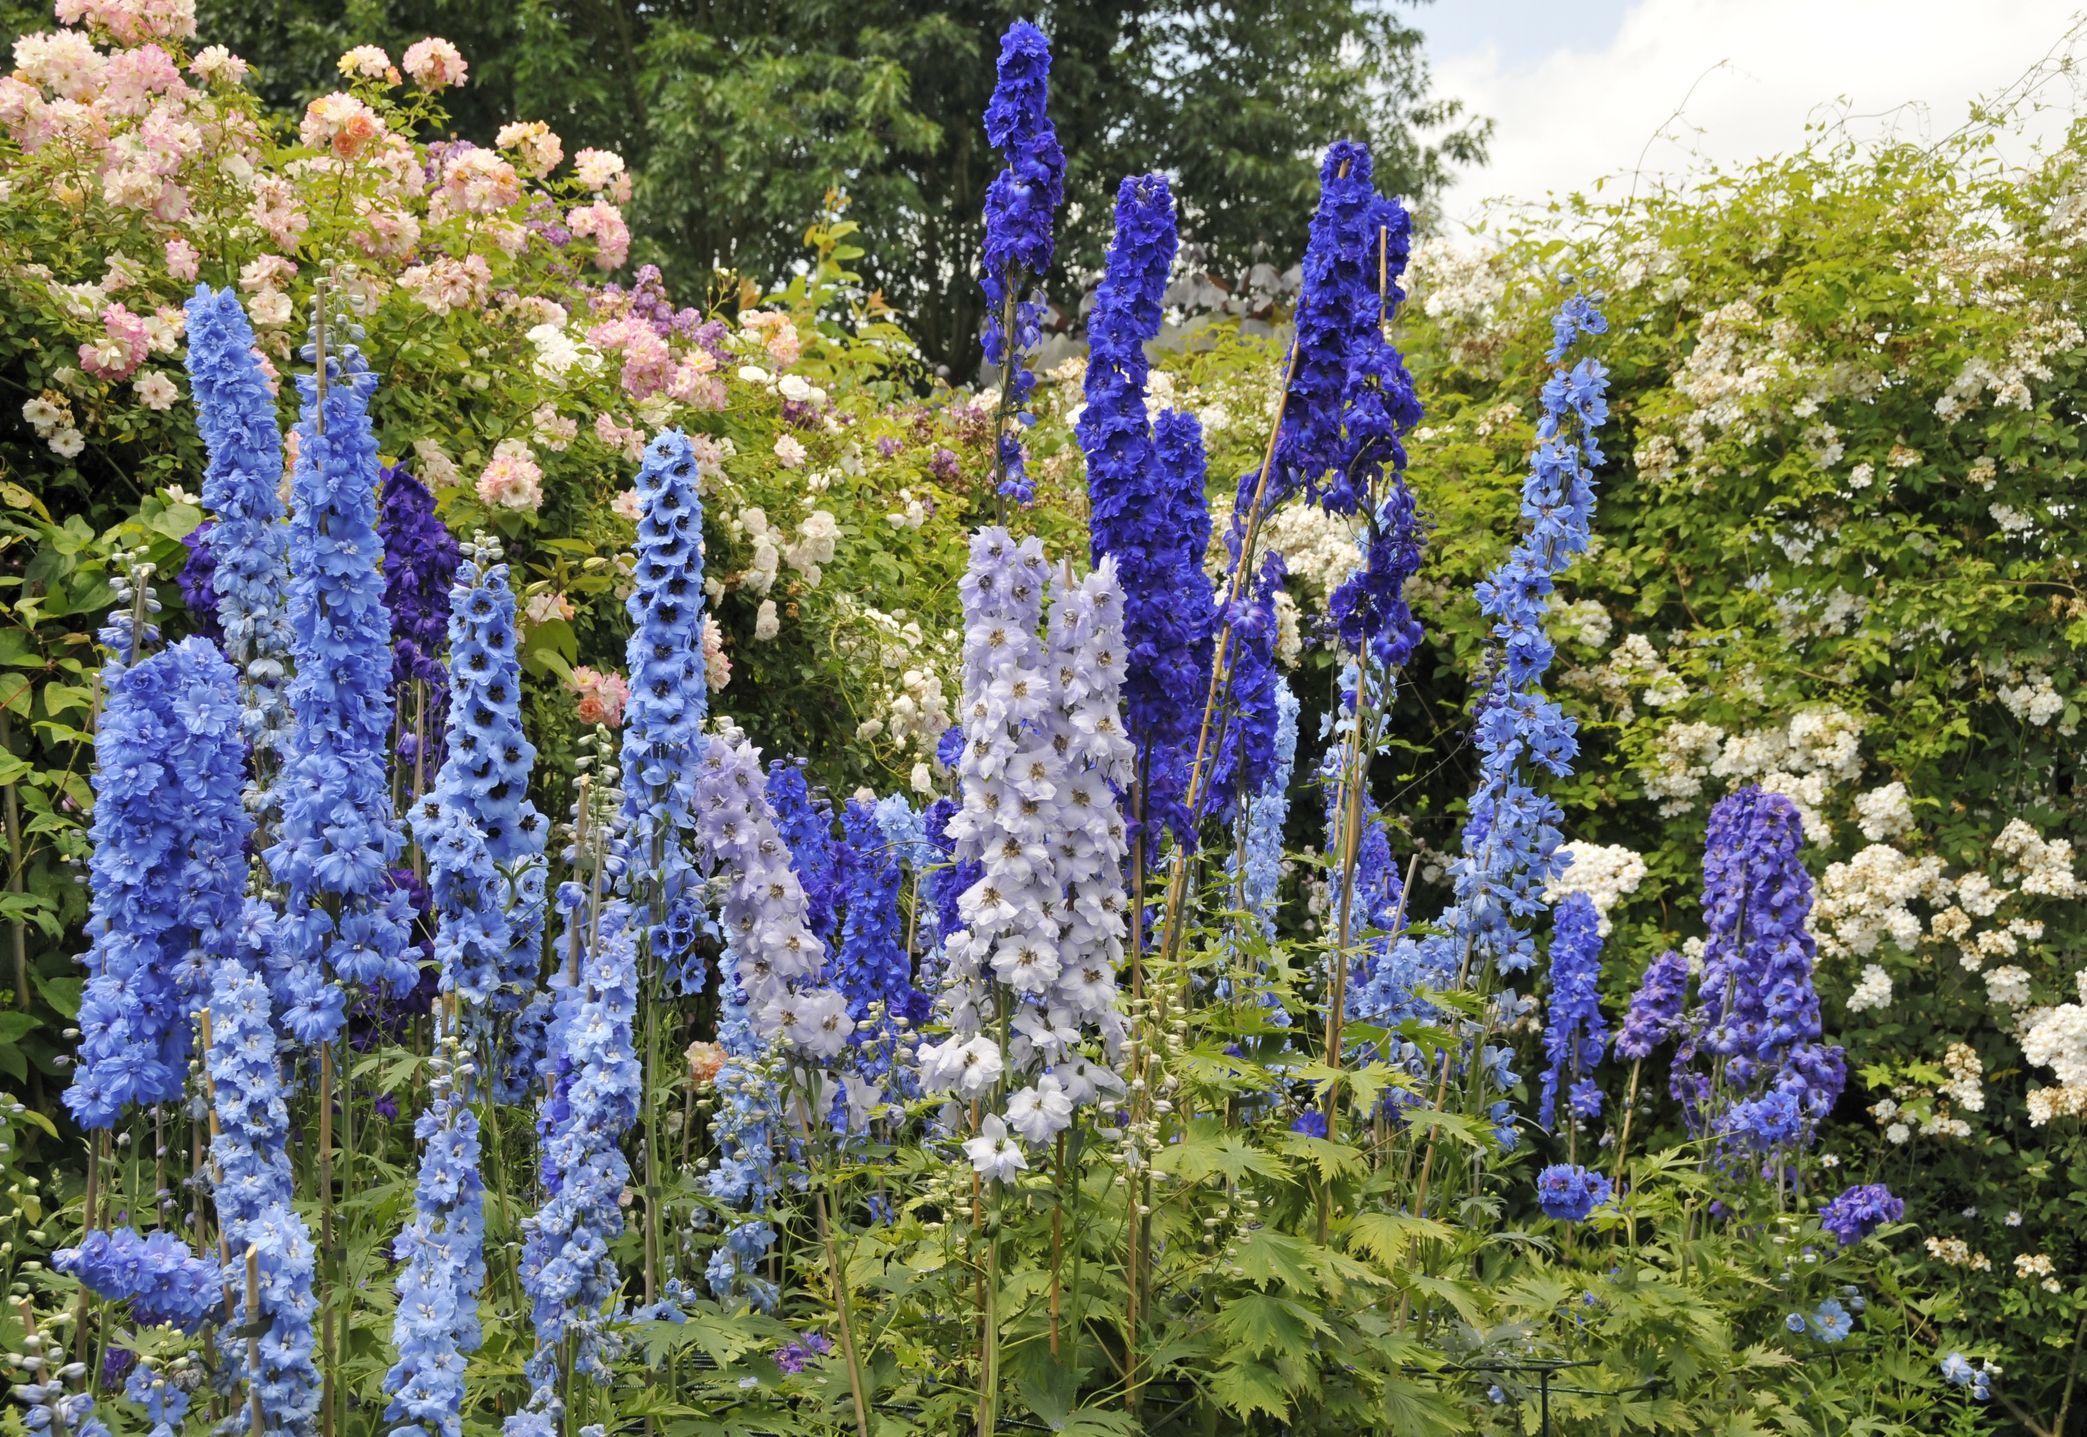 10 Best White Flowers for Your Garden